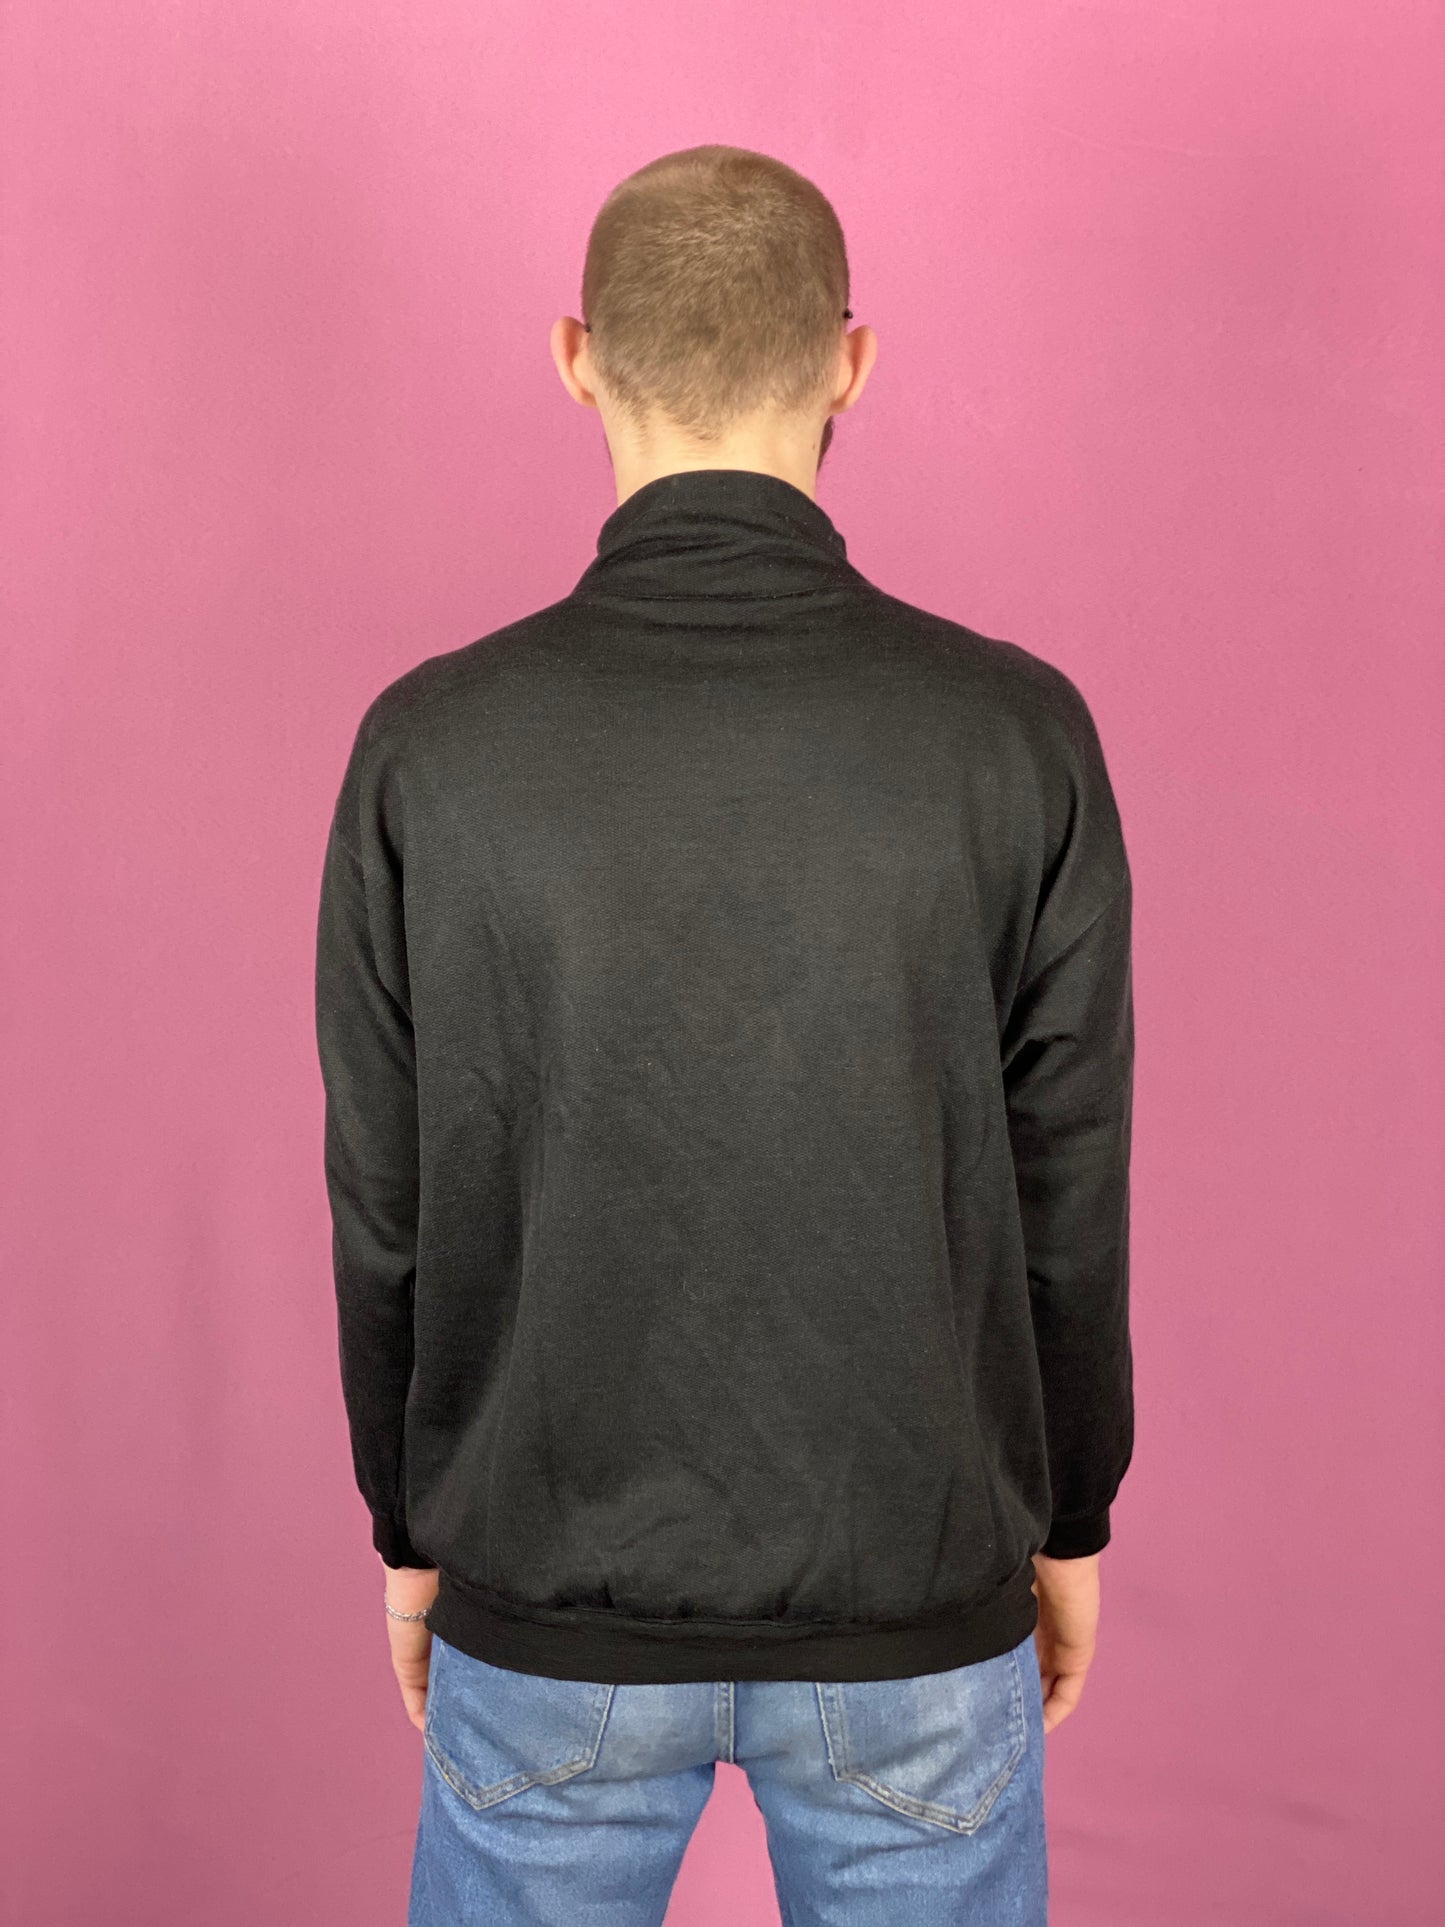 90s Melina Vintage Men's 1/4 Zip Track Jacket - Medium Black Cotton